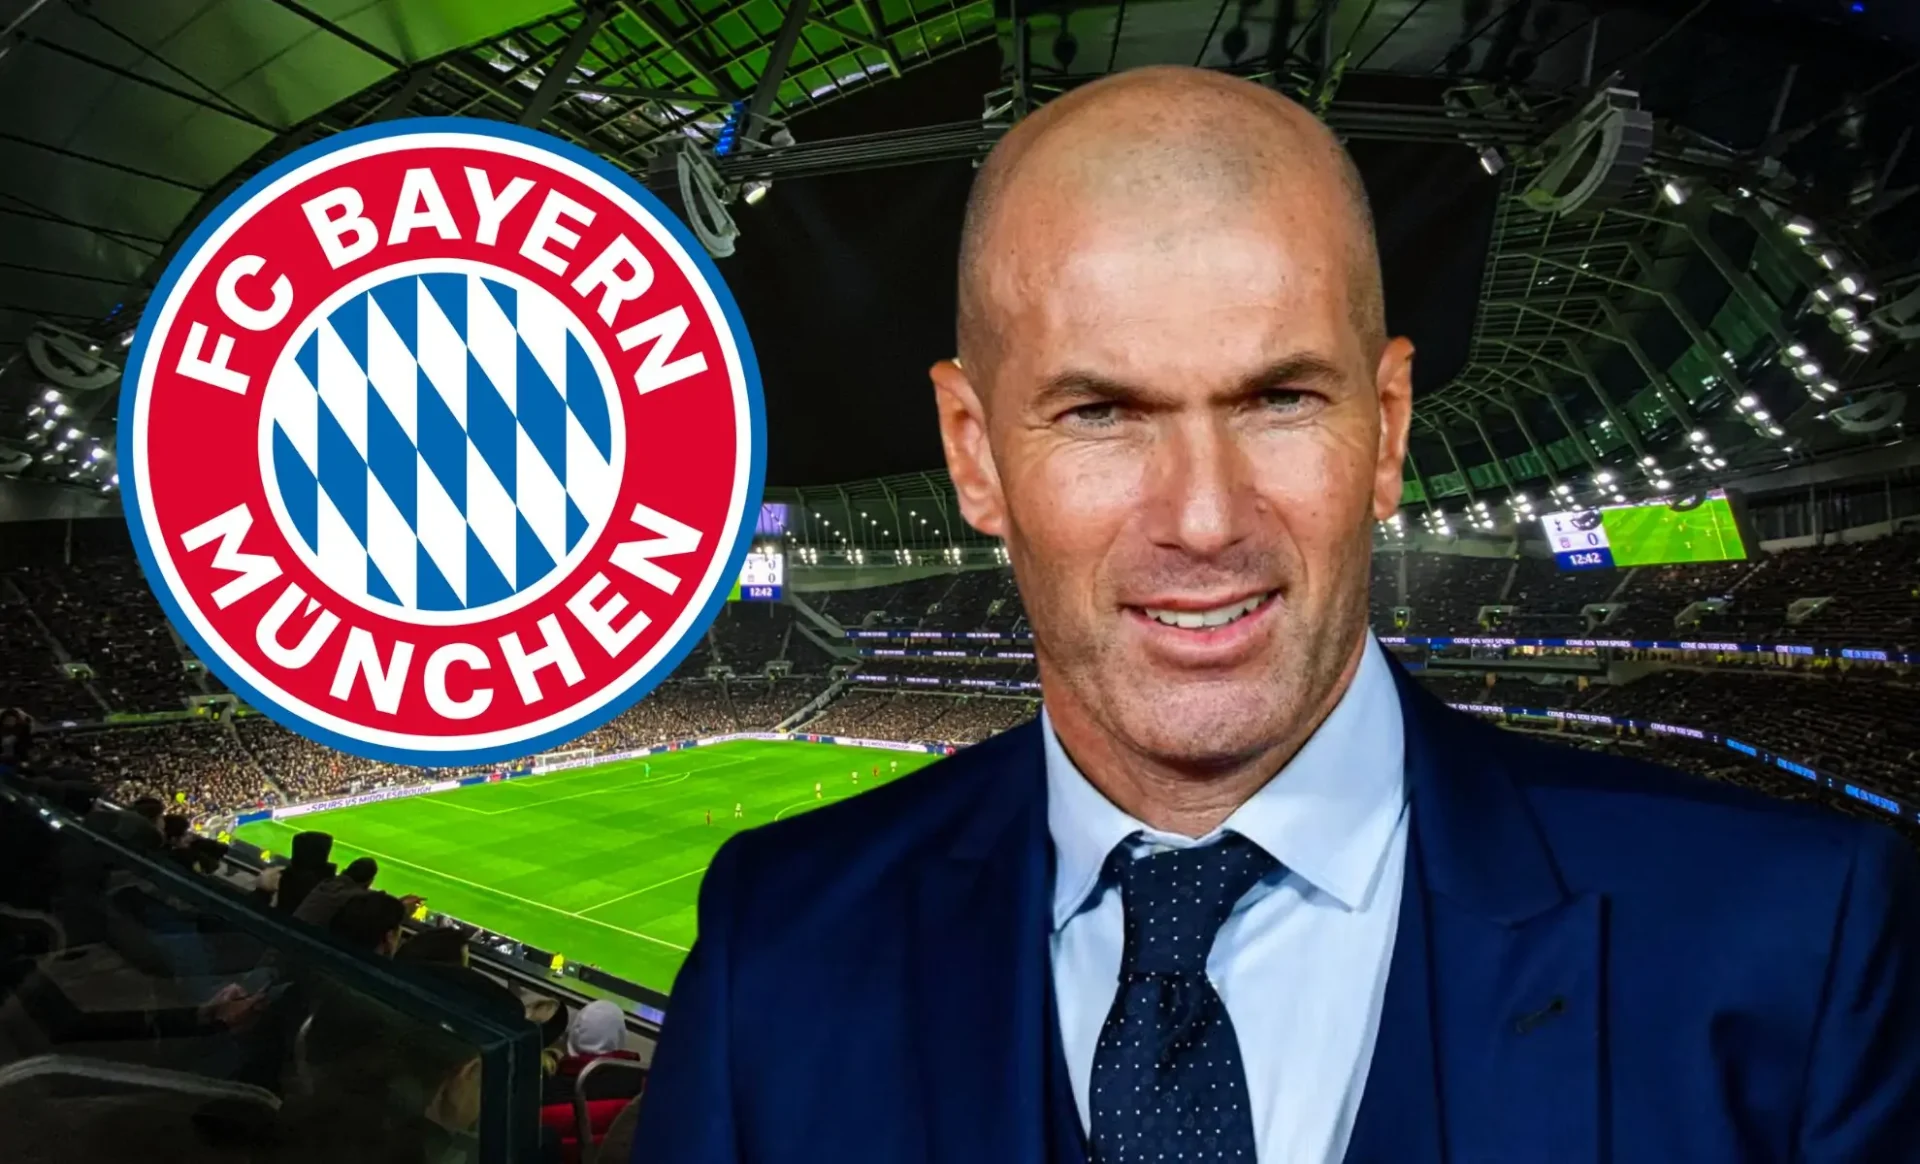 Zinedine Zidane au Bayern Munich, l'évidence se rapproche